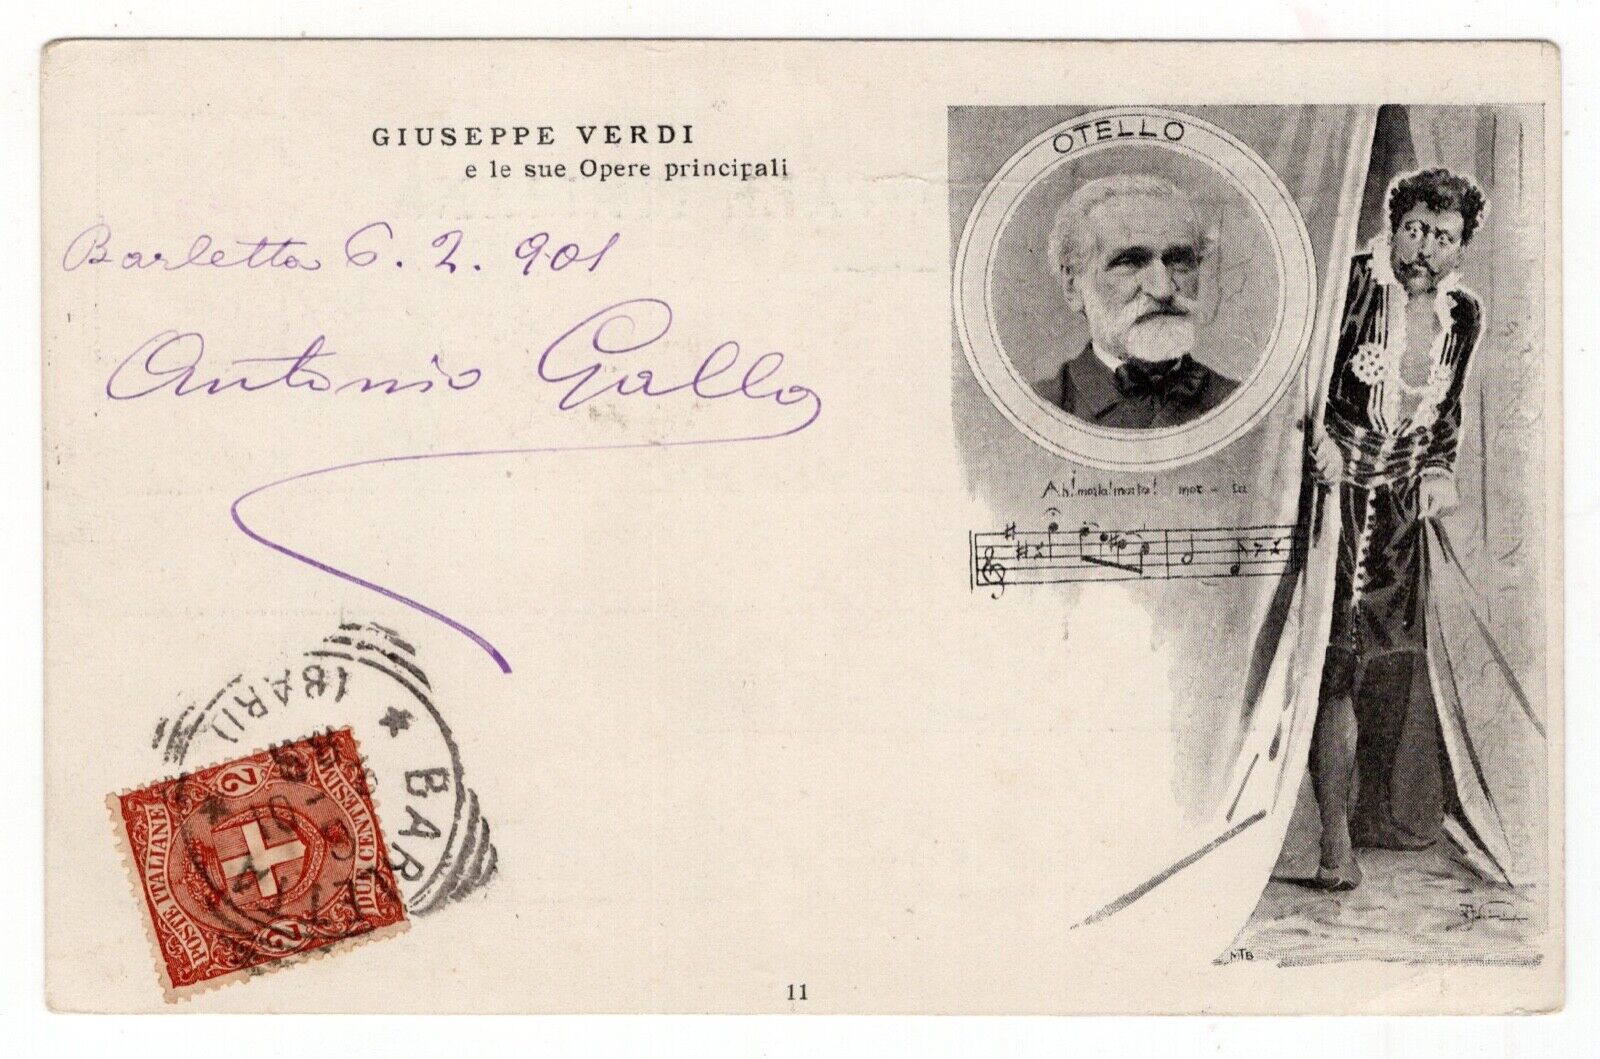 GIUSEPPE VERDI POSTCARD POSTALLY USED FEBRUARY 6th 1901 TEN DAYS AFTER HIS DEATH